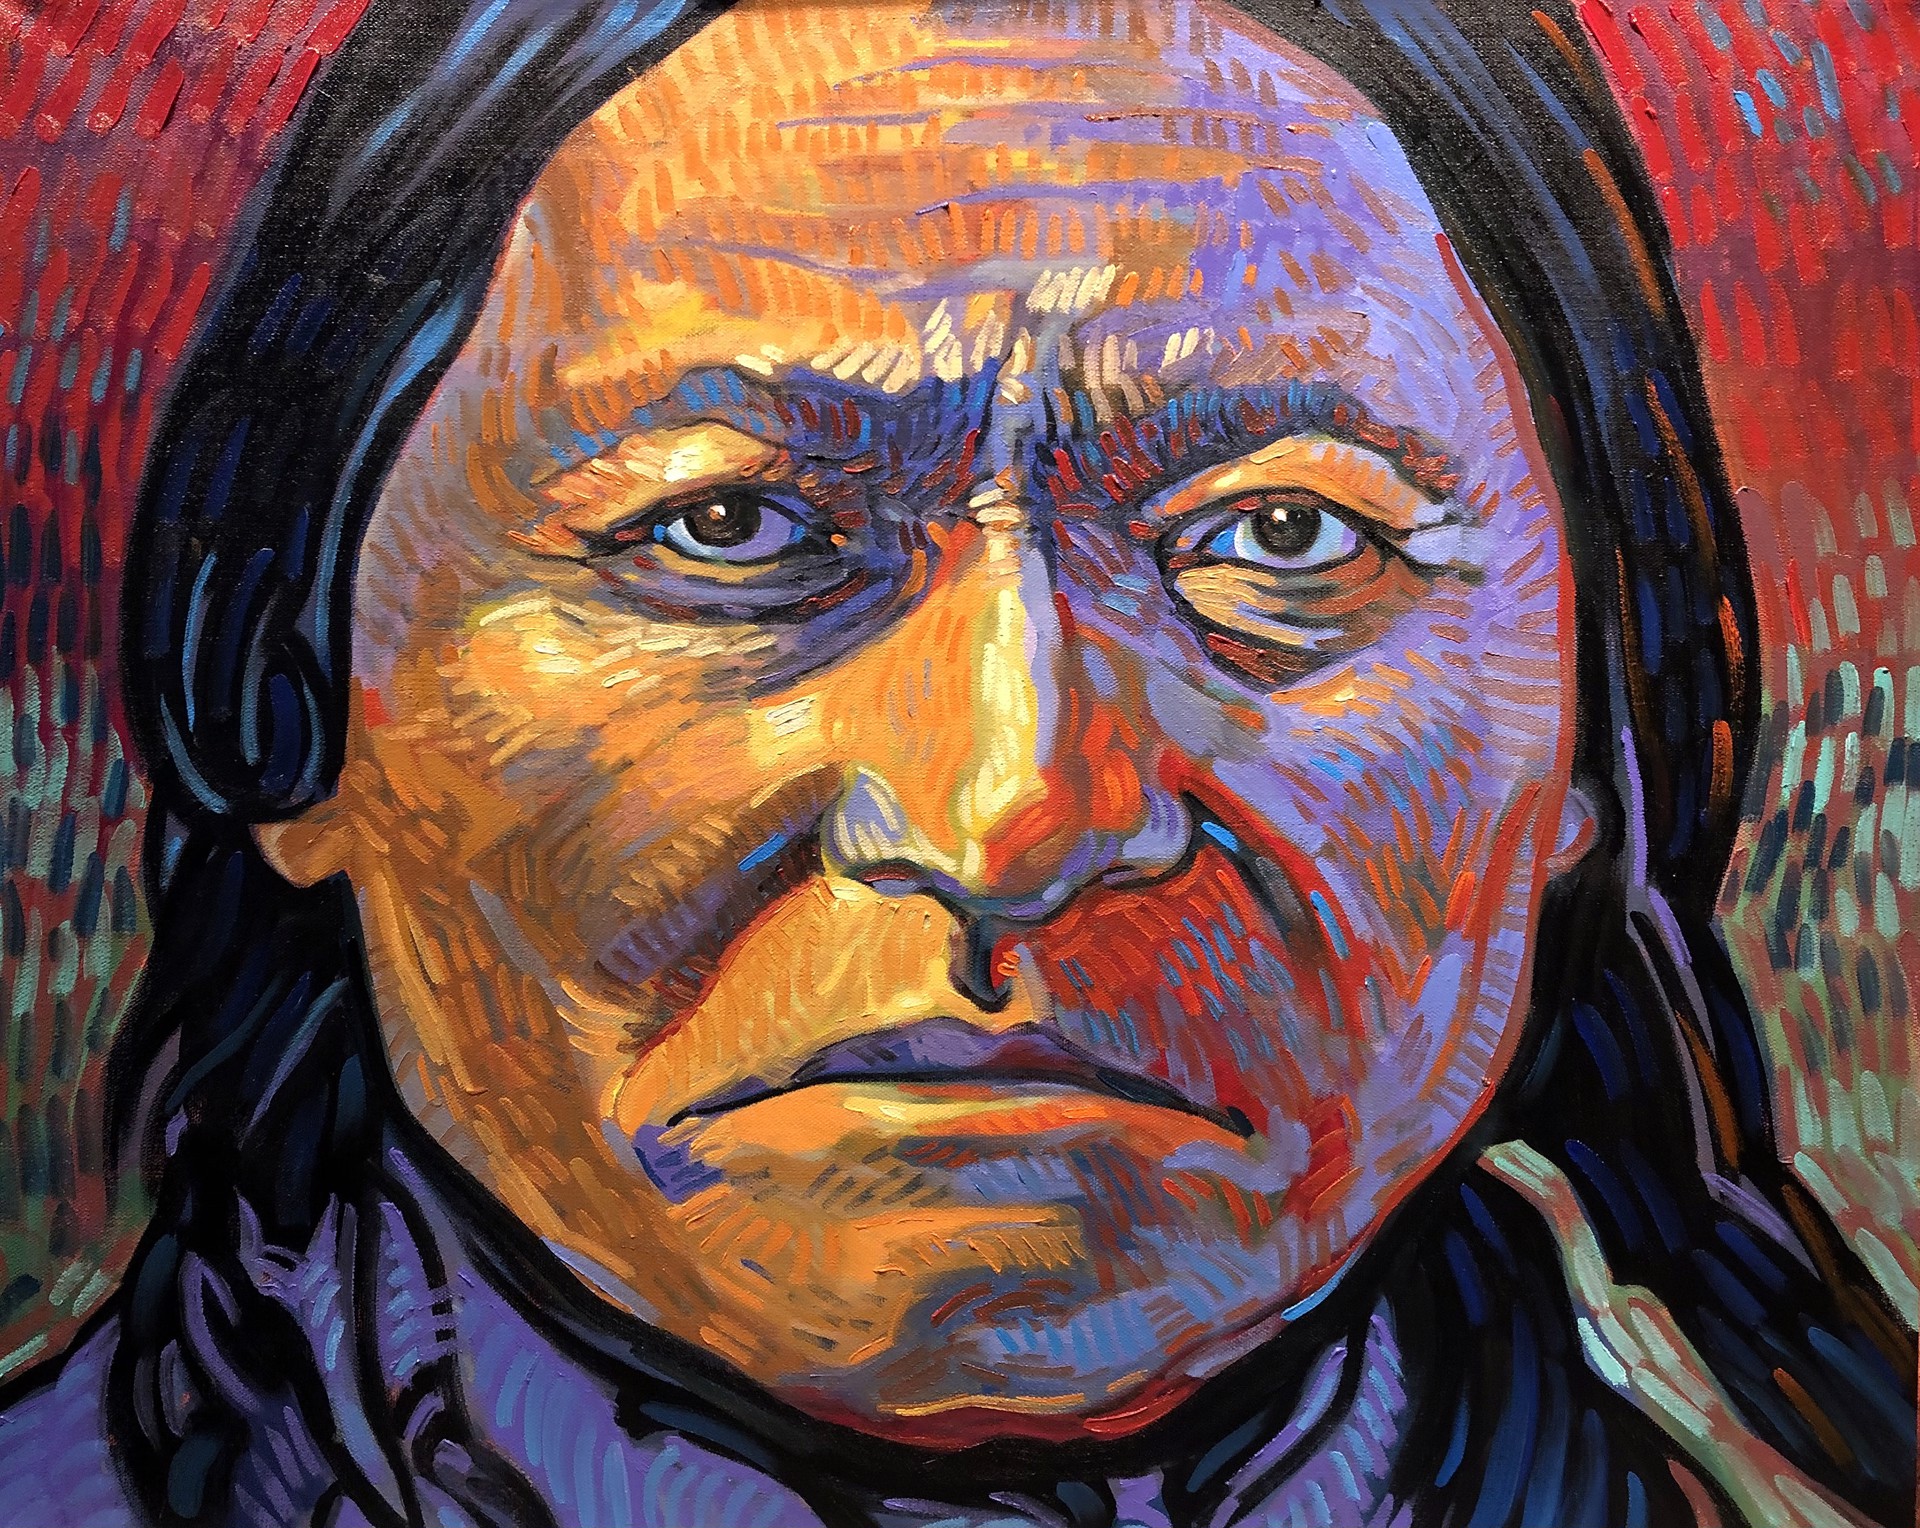 Sitting Bull by Brad Price